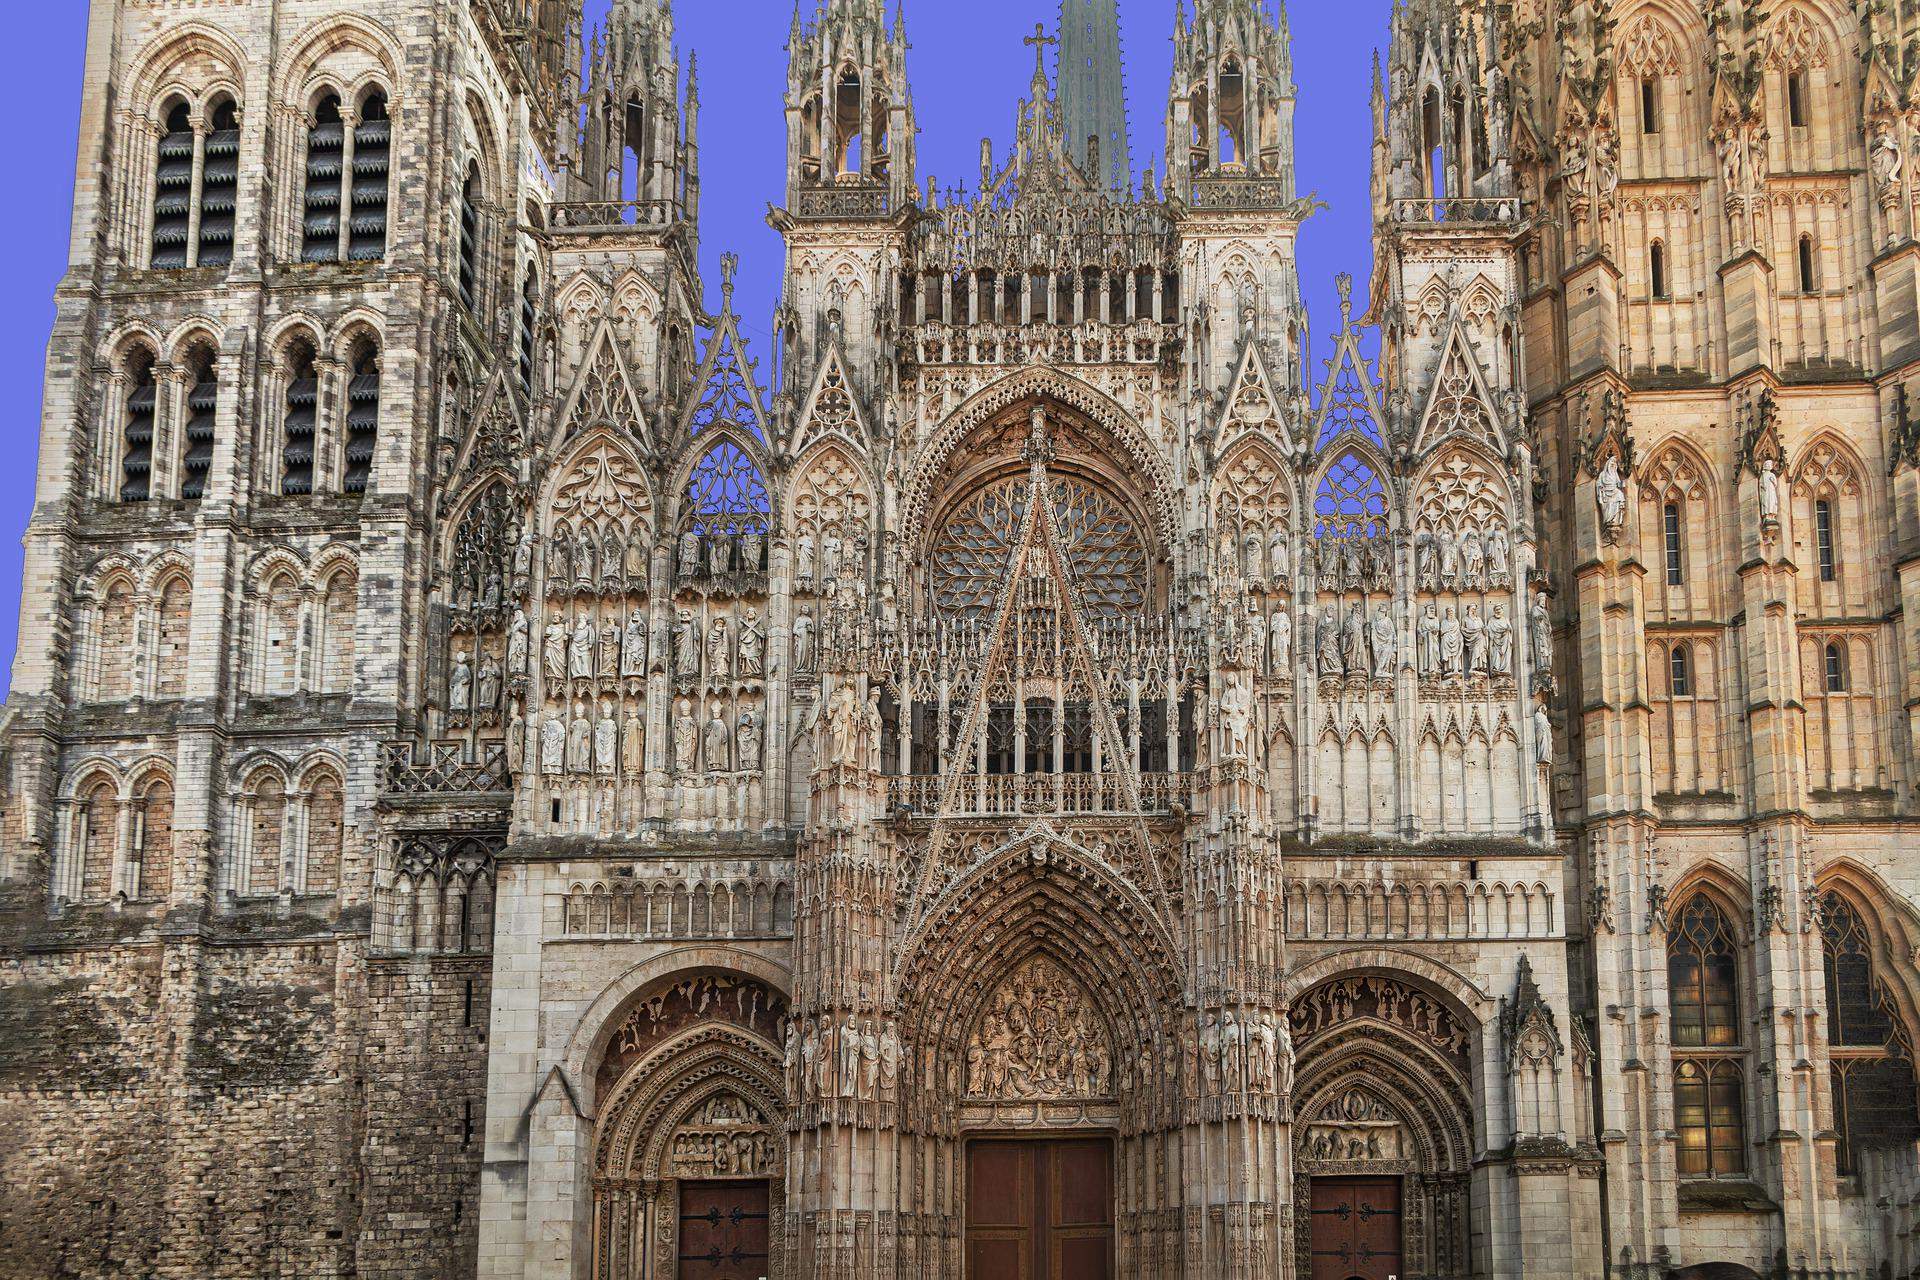 Busreis Normandië - Rouen ©edmondlafoto from Pixabay